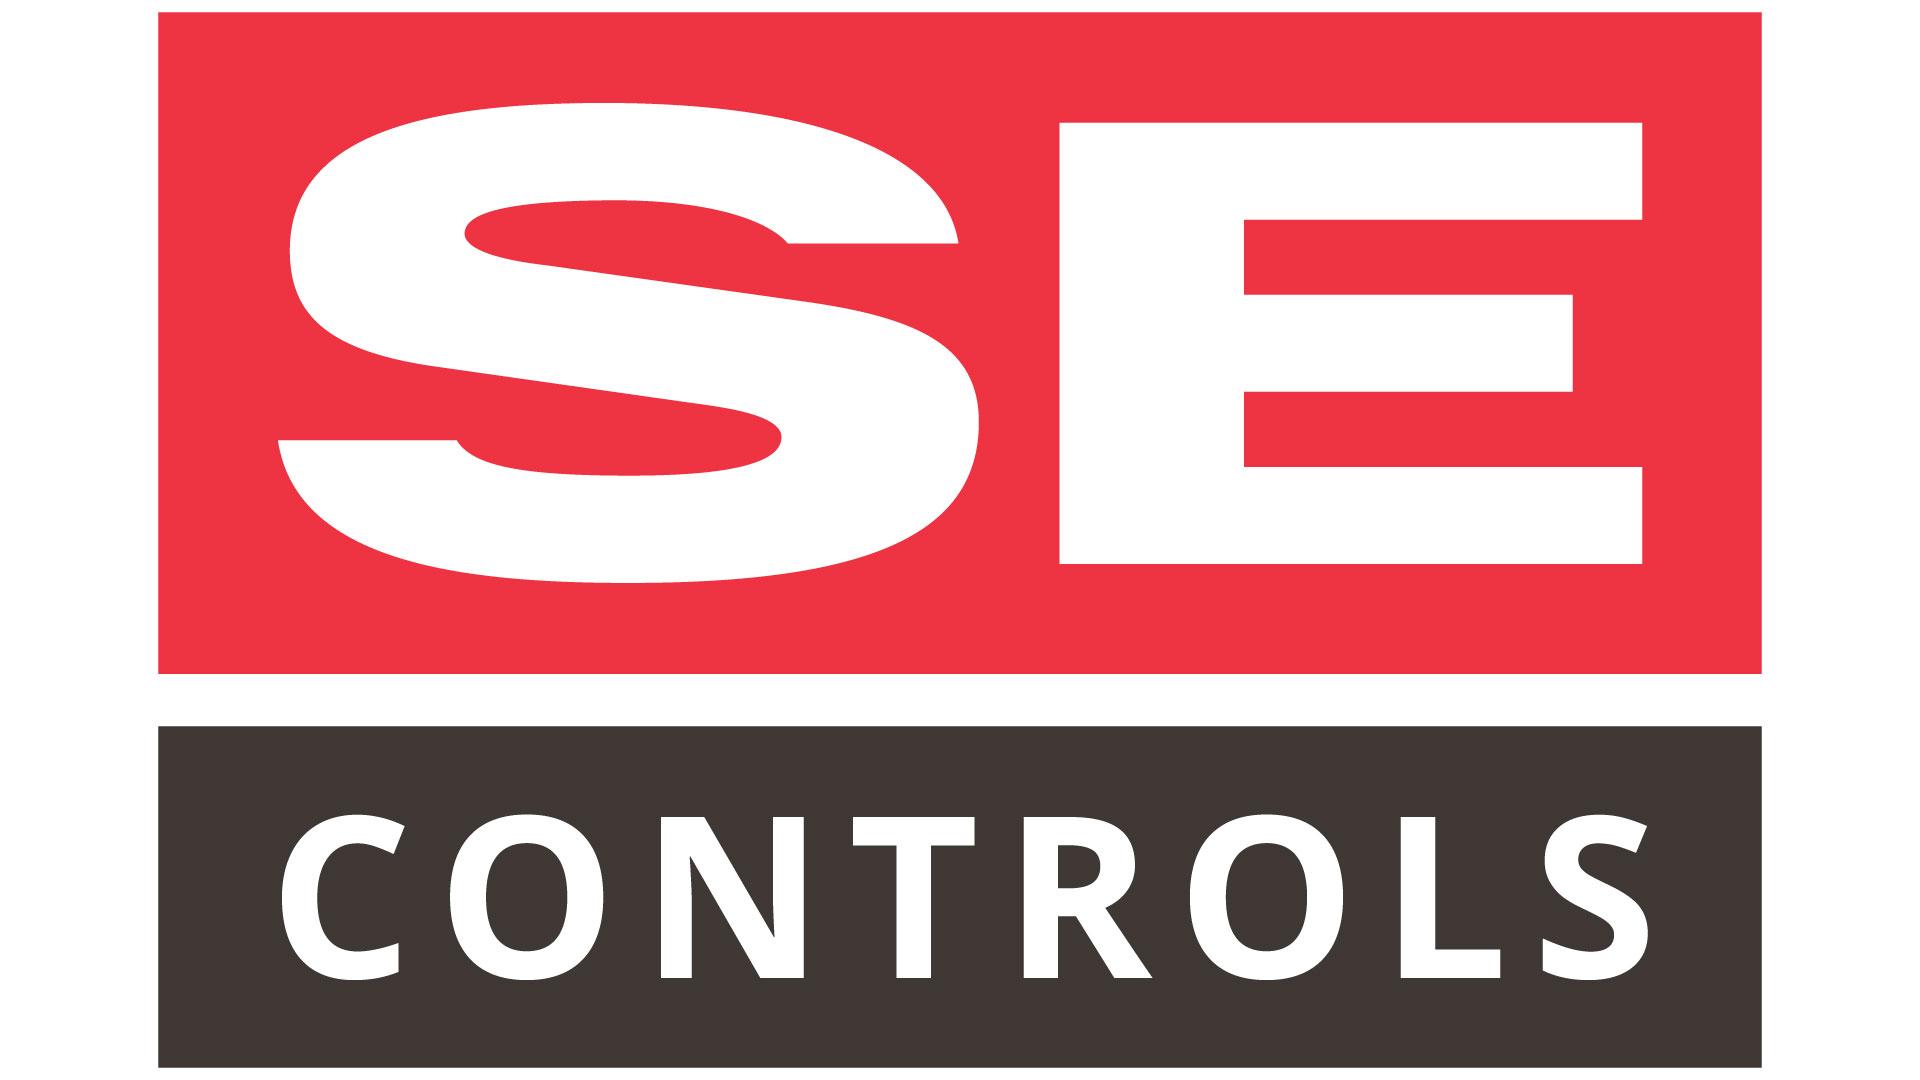 se-controls